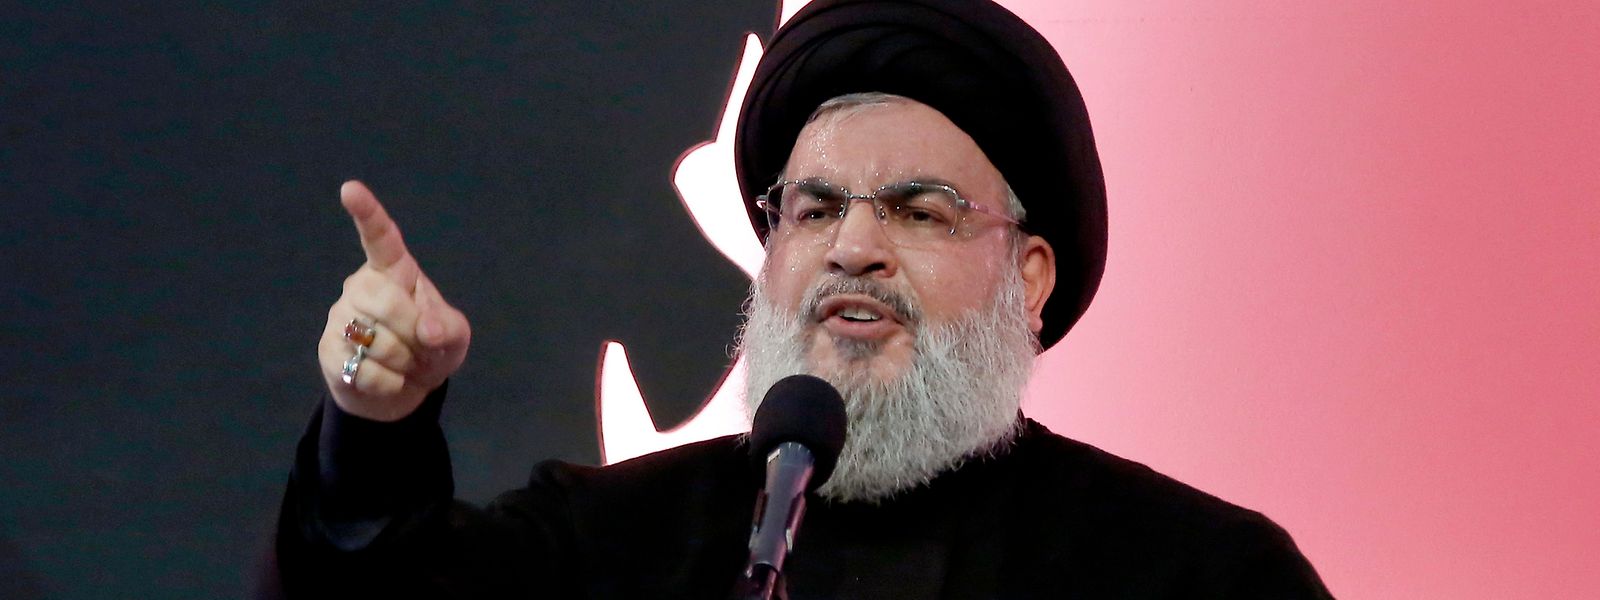 Gerüchte besagen, dass Hisbollah-Chef Hassan Nasrallah tot ist.